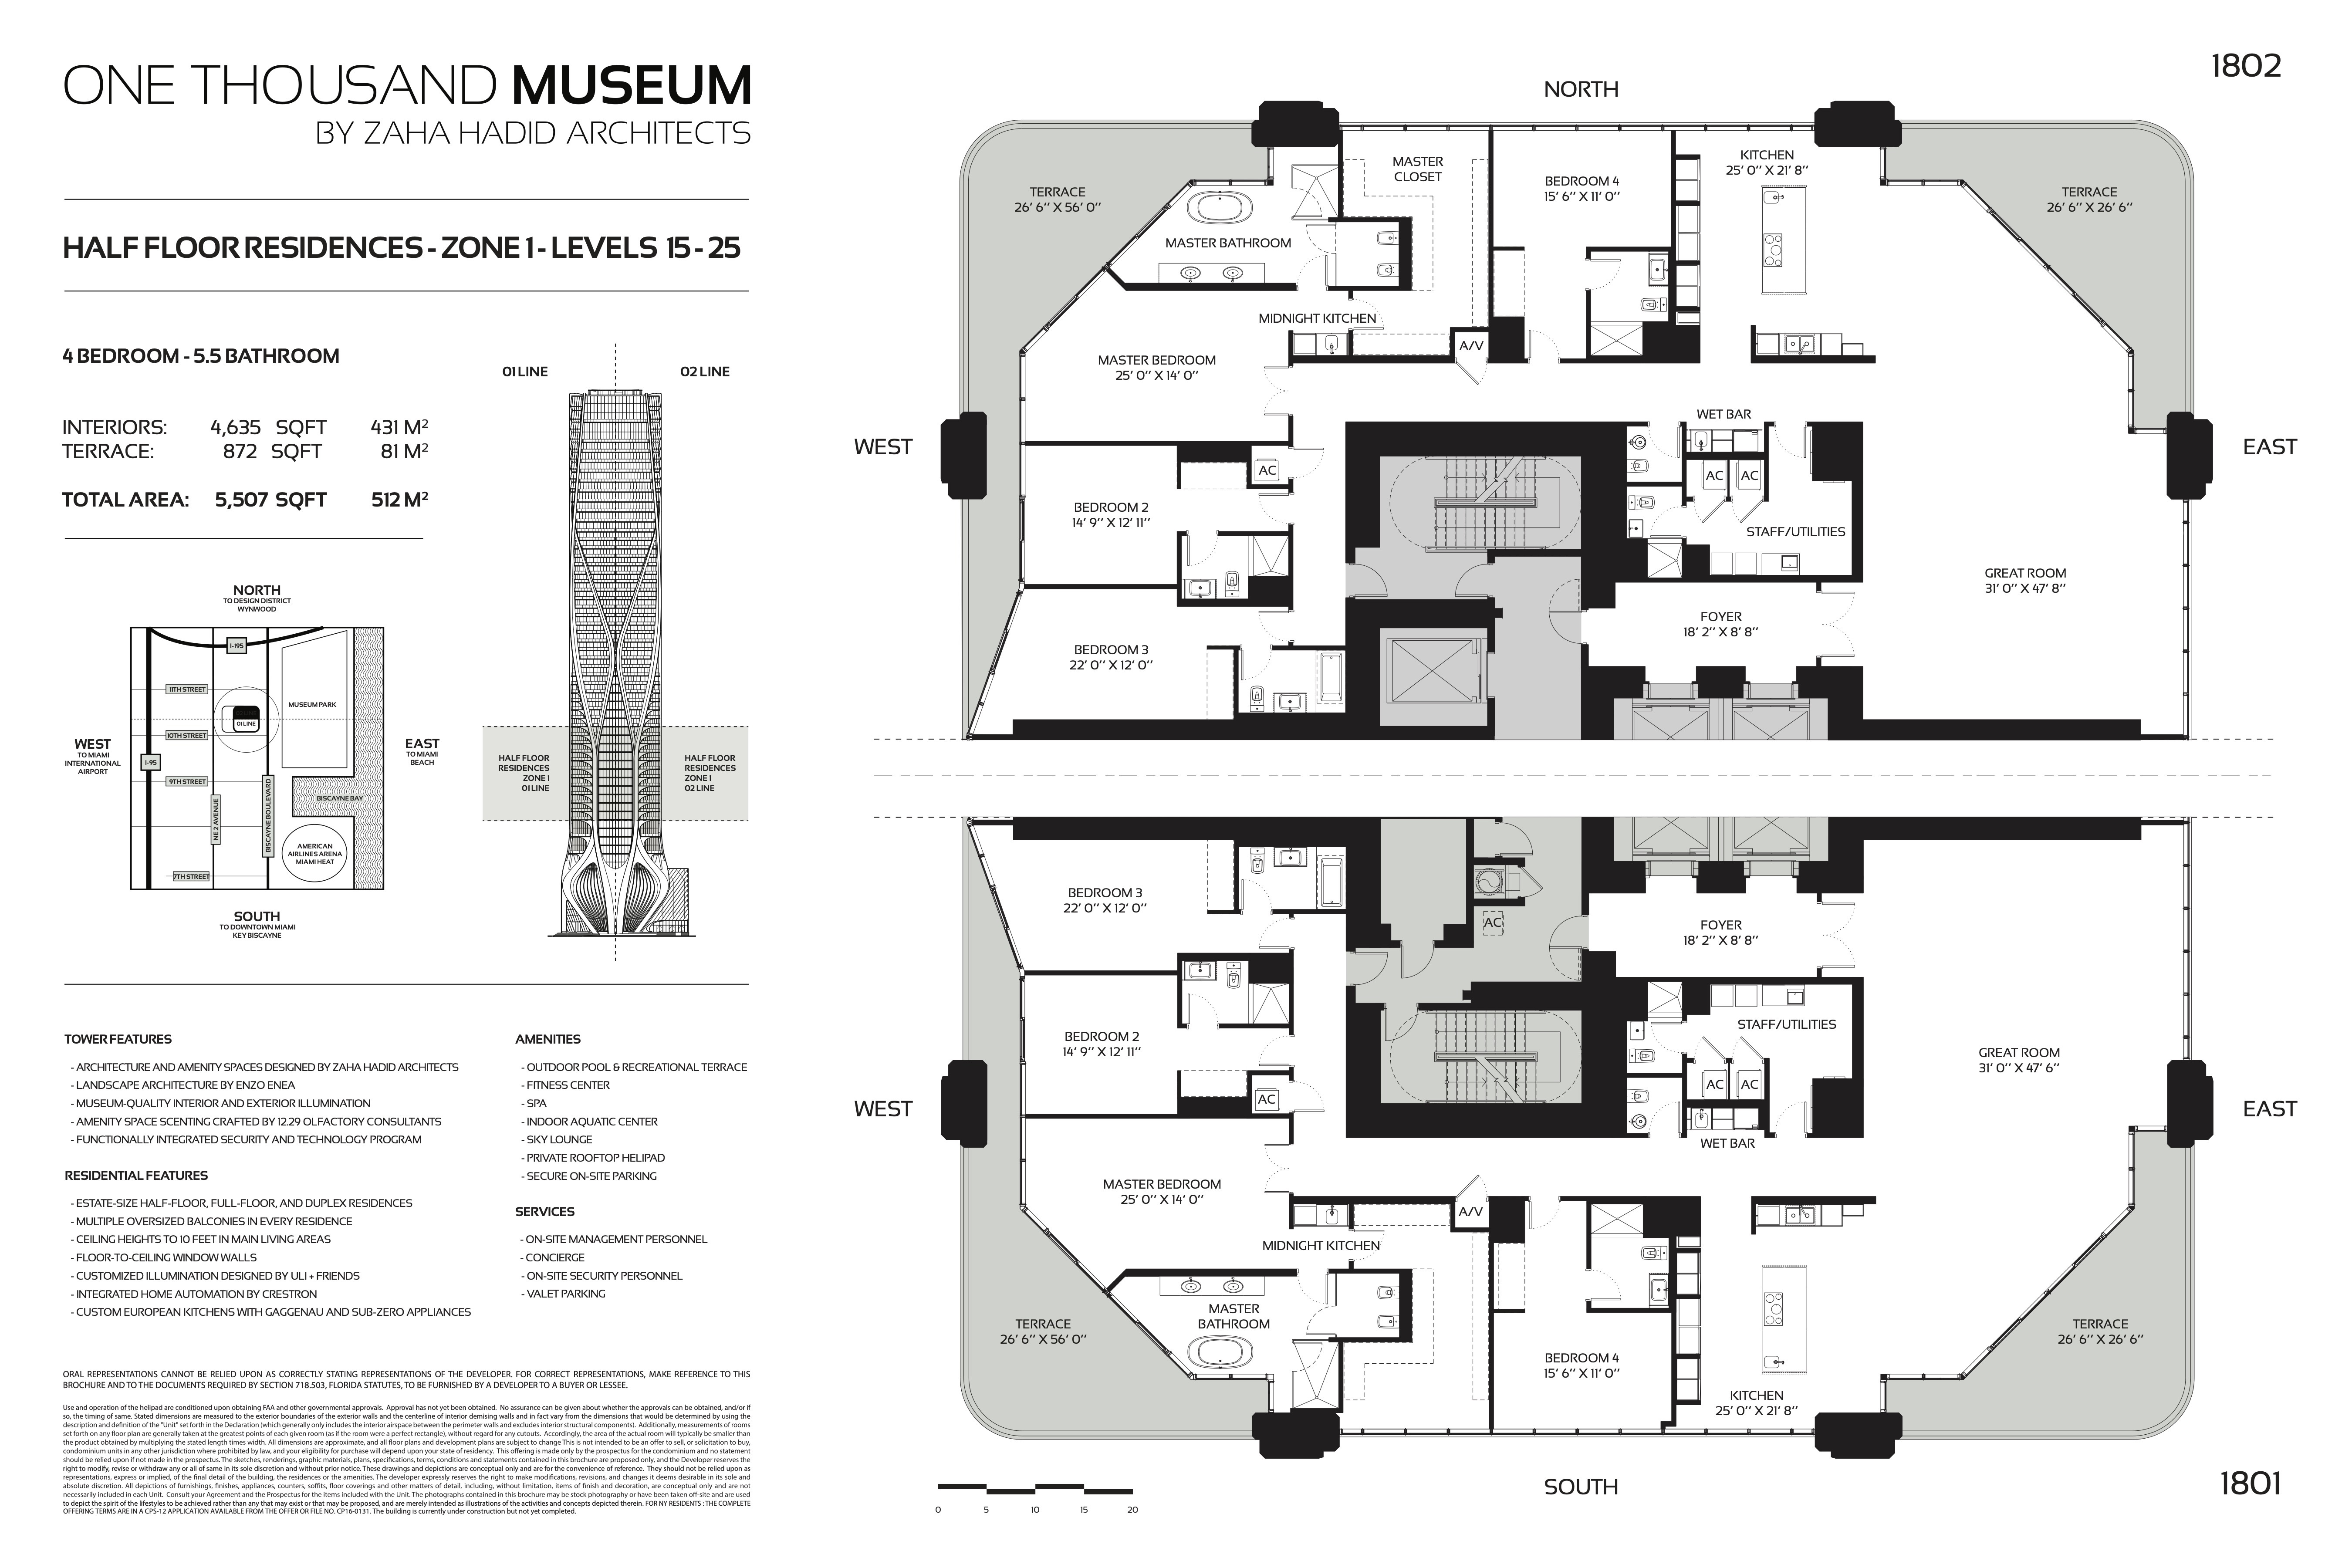 Floor Plan for 1000 Museum Miami Floorplans, Half Floor Residence Zone 1 Levels 15-25